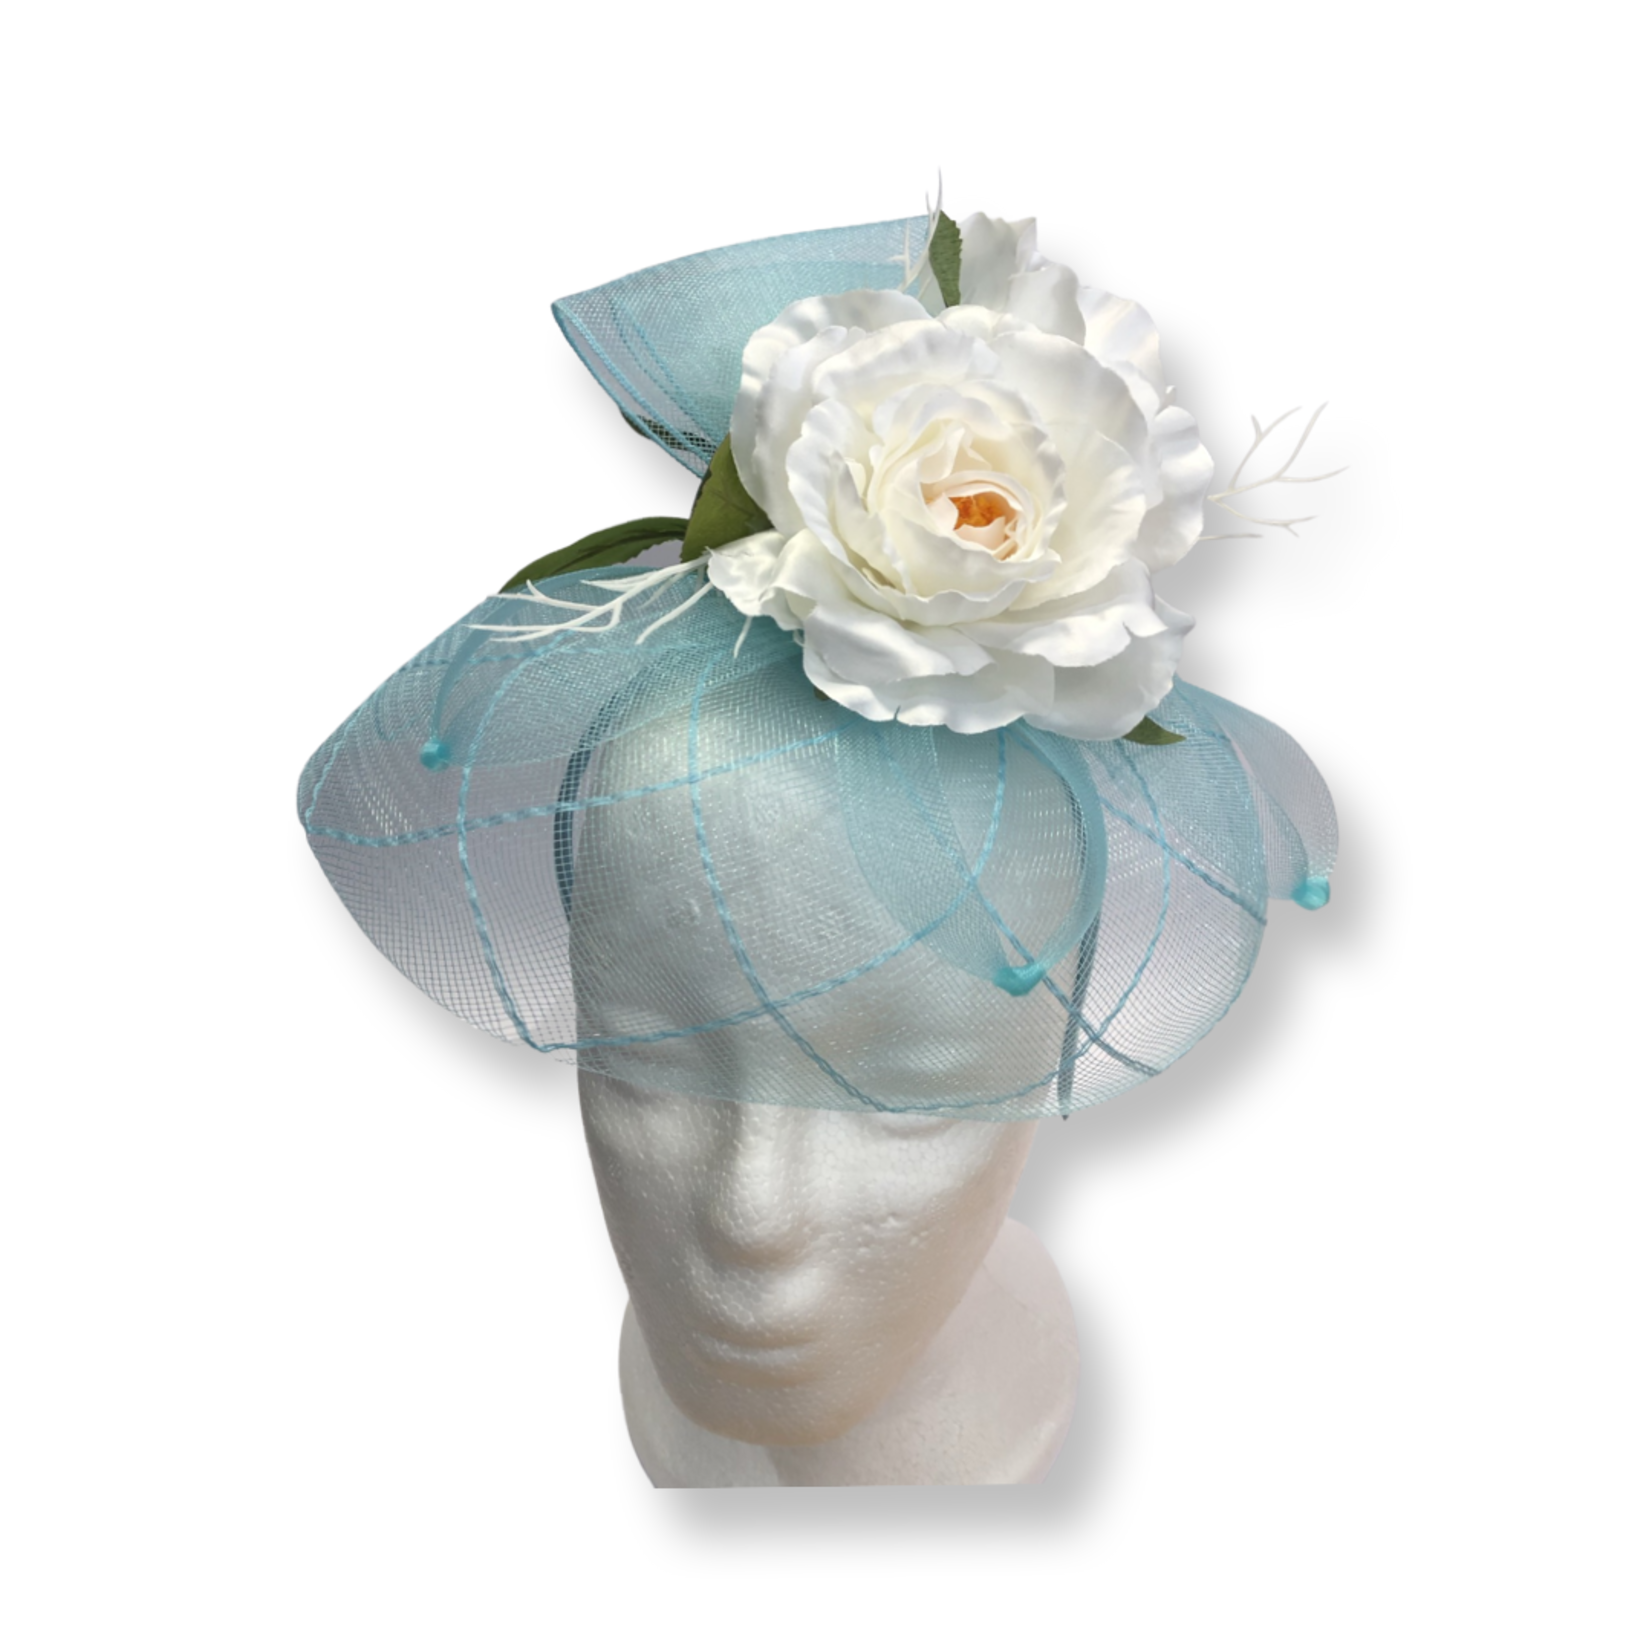 OPO Aqua with White Rose Hat Fascinator